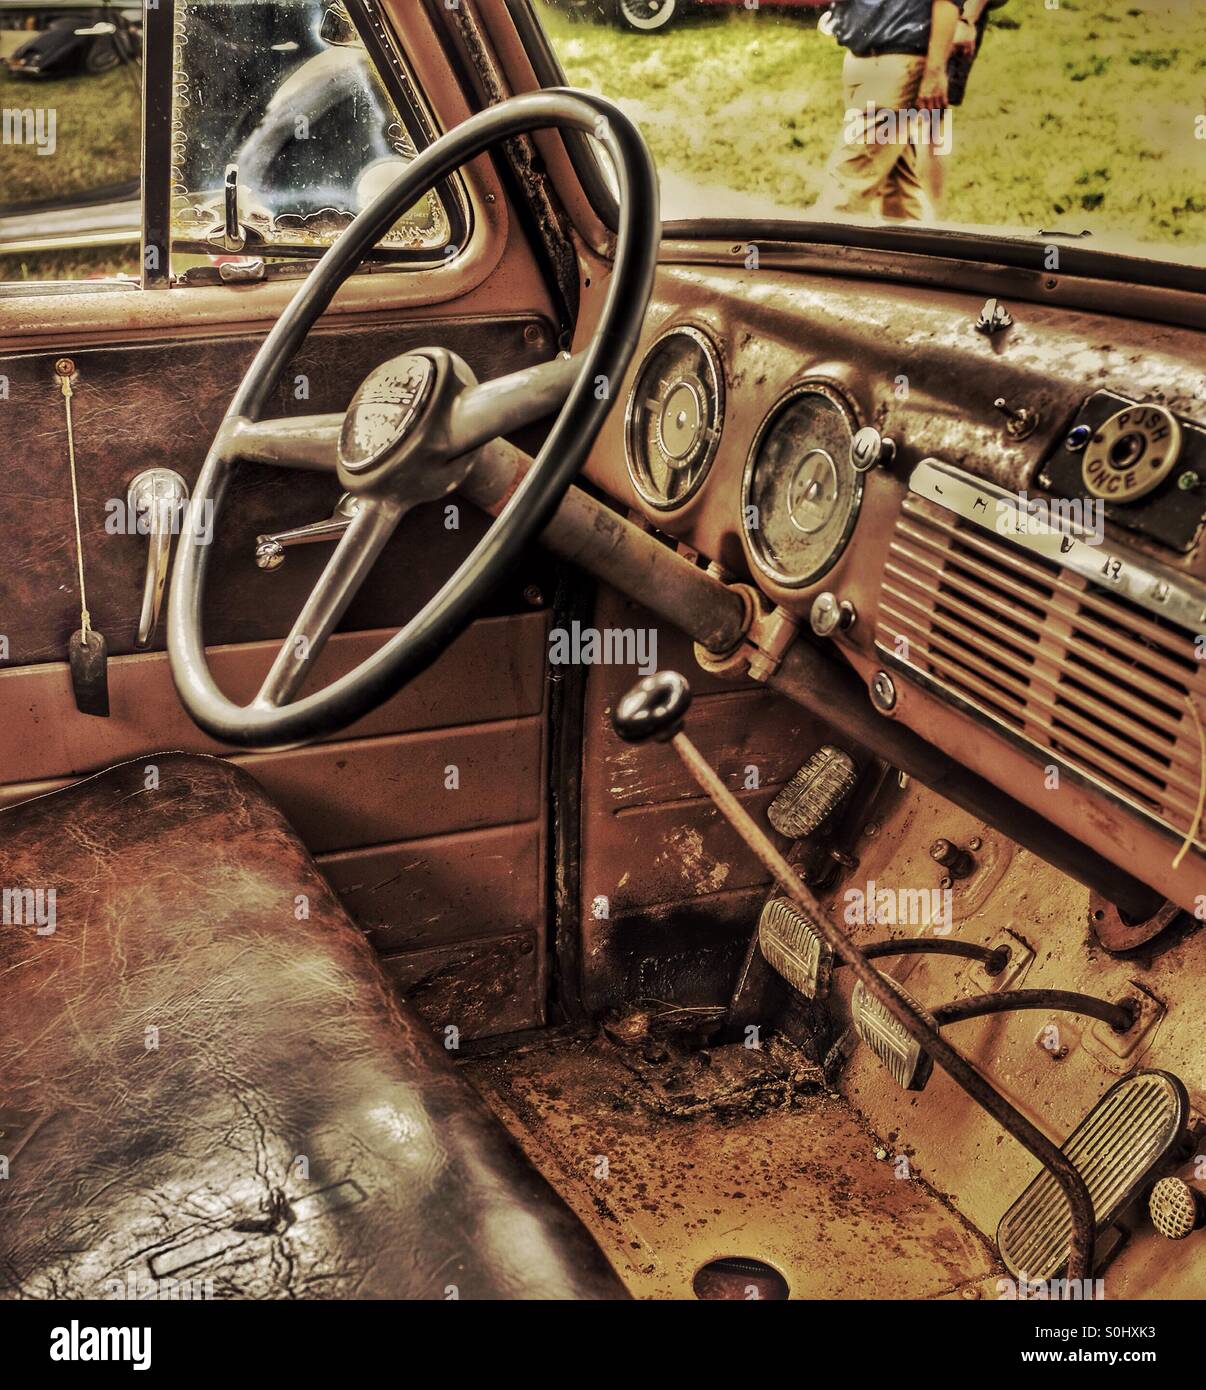 Vintage car interior Stock Photo